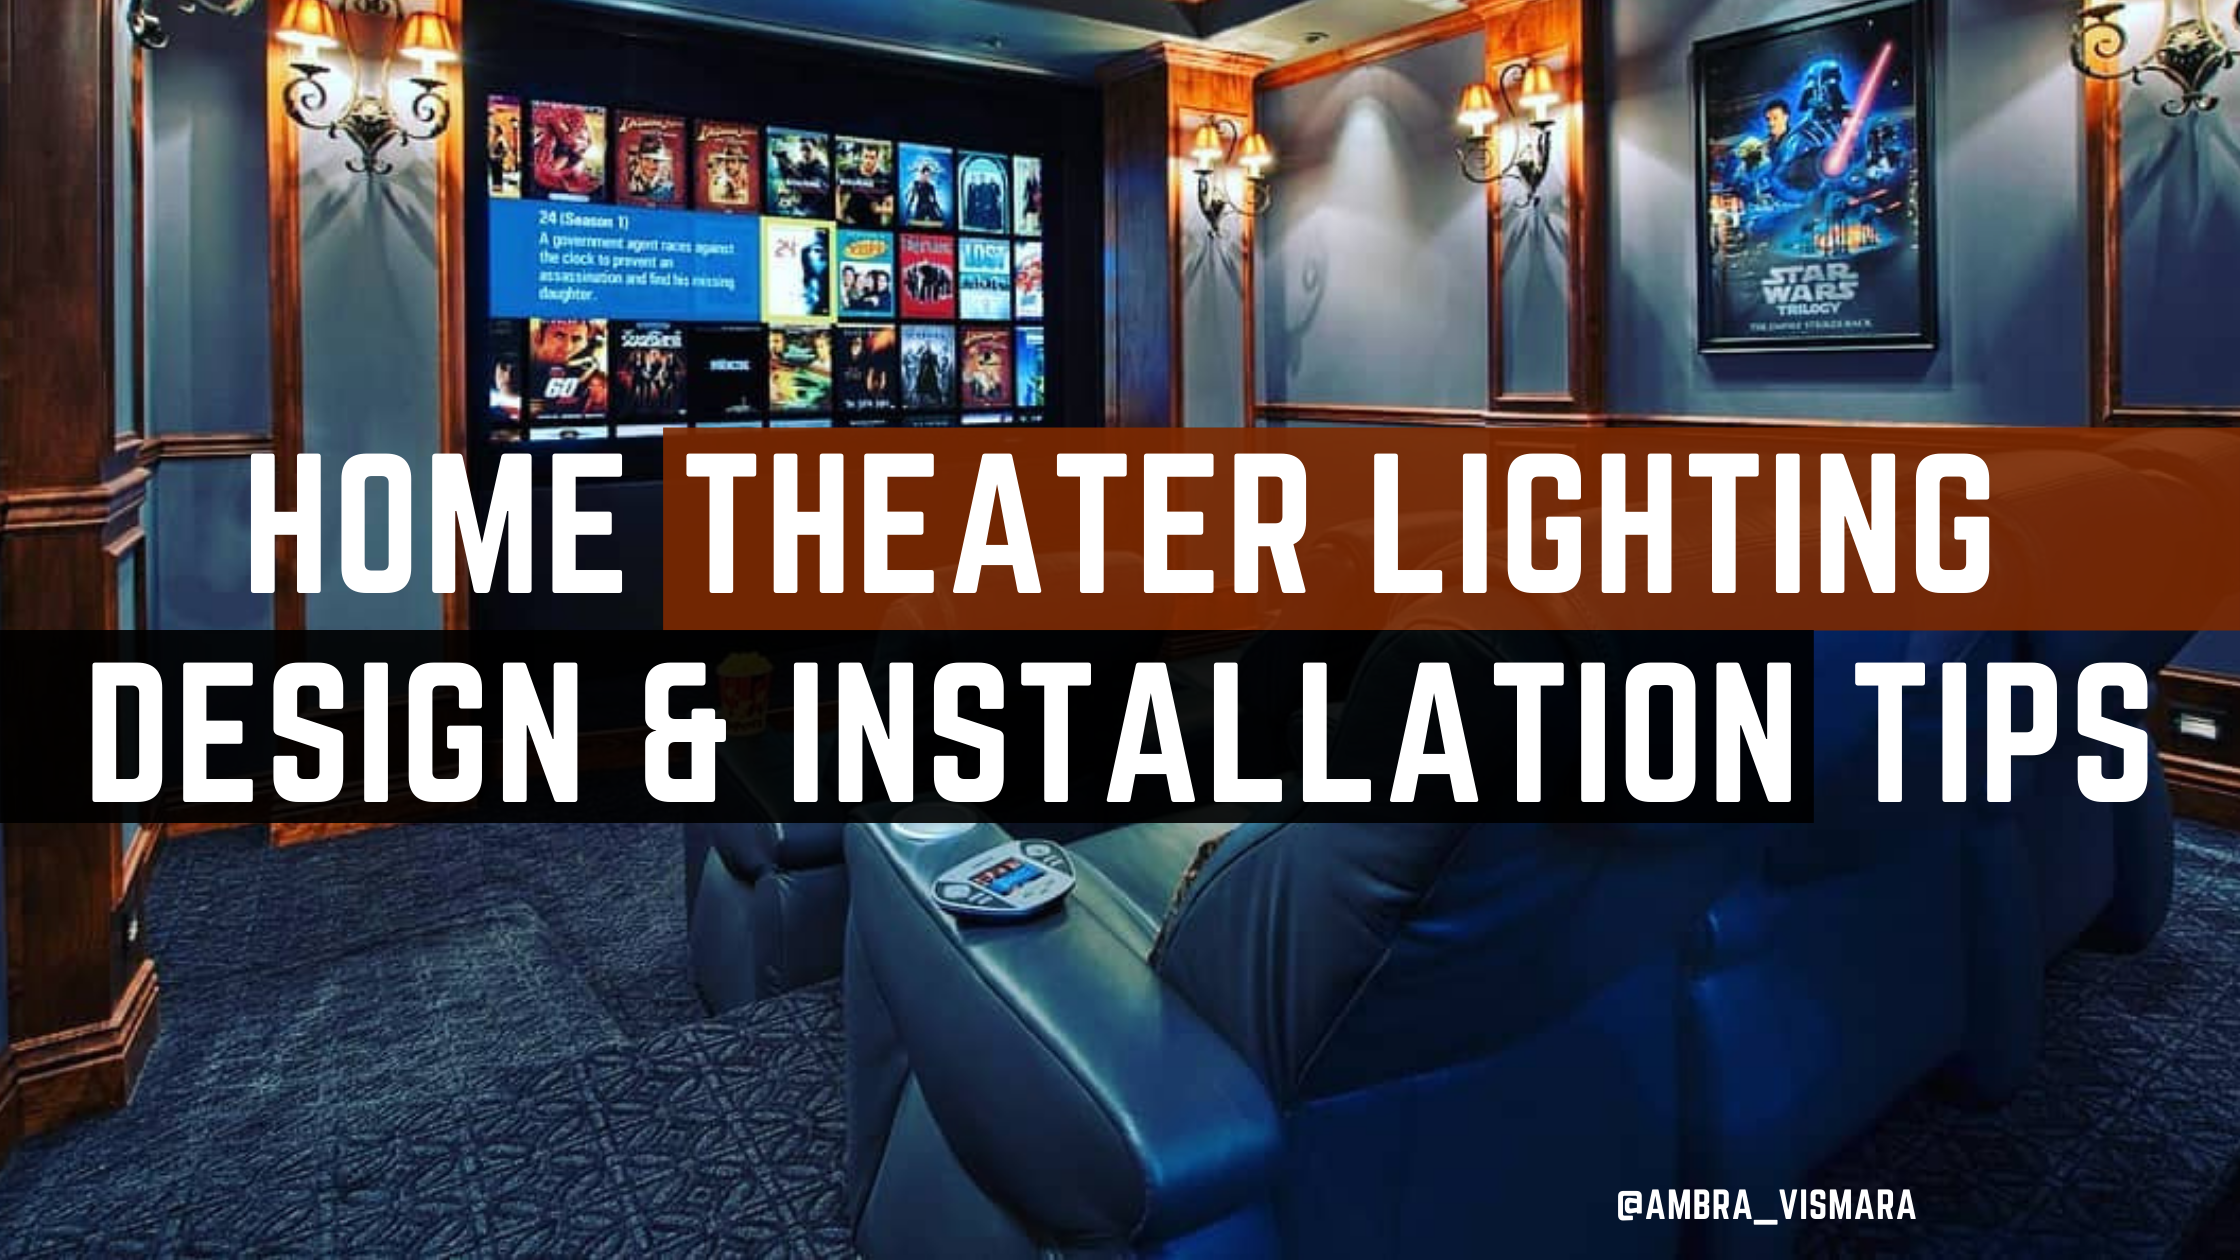 4. Home Theater Lighting Design & Installation Tips